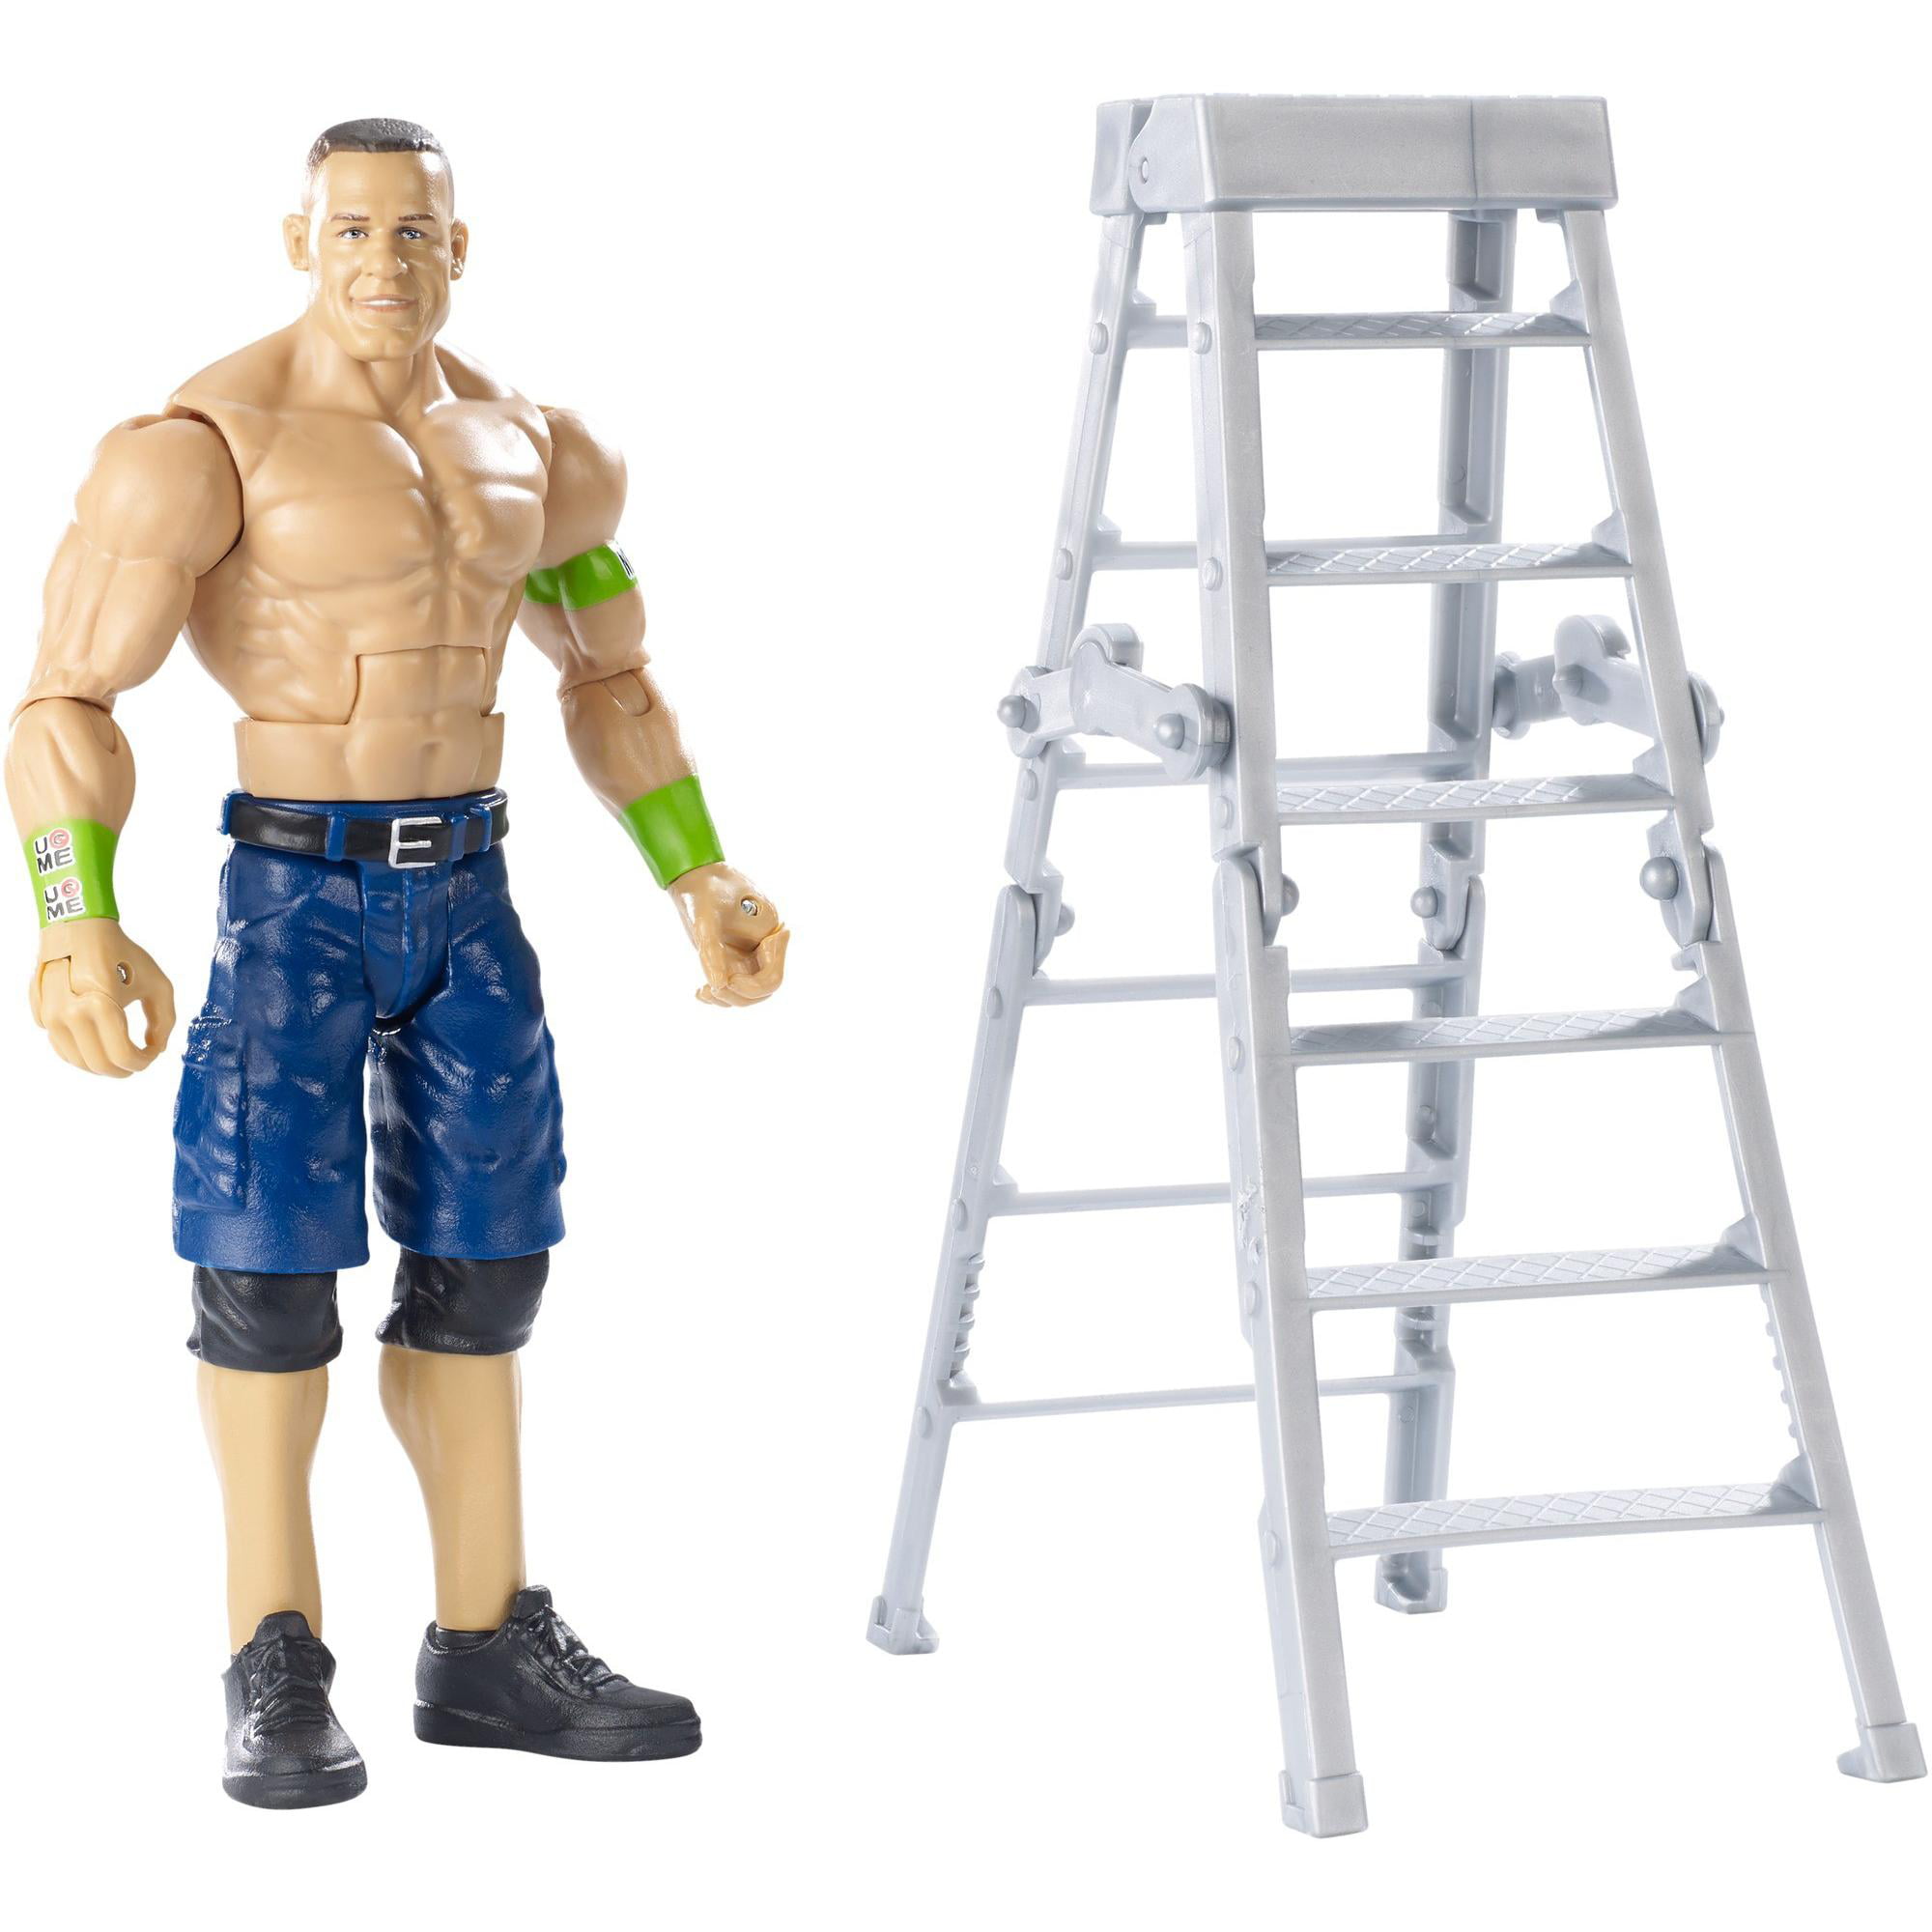 WWE Wrekkin John Cena Action Figure - Walmart.com ...